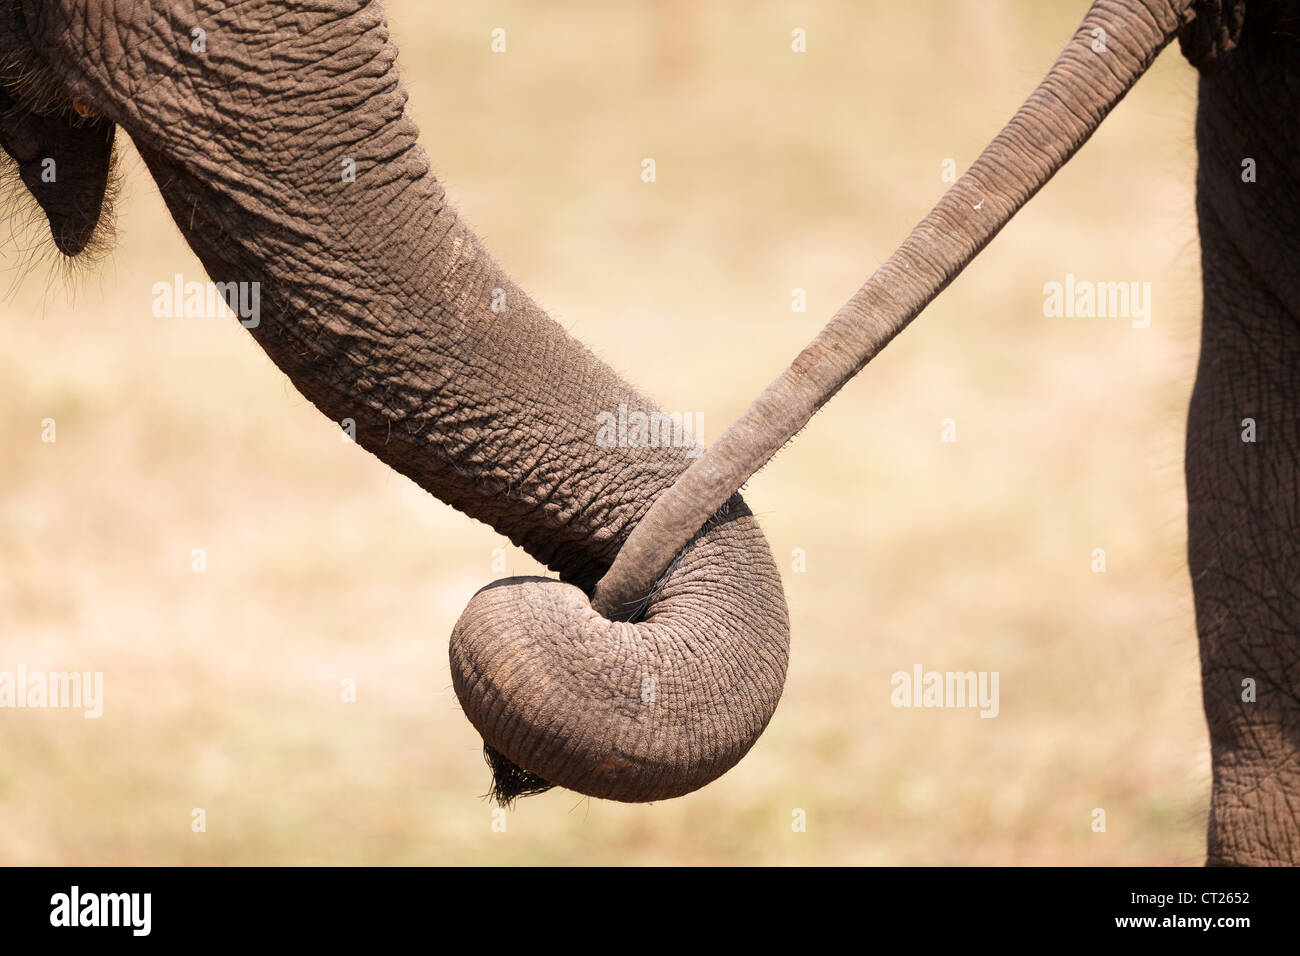 asian elephant couple embracing together Stock Photo